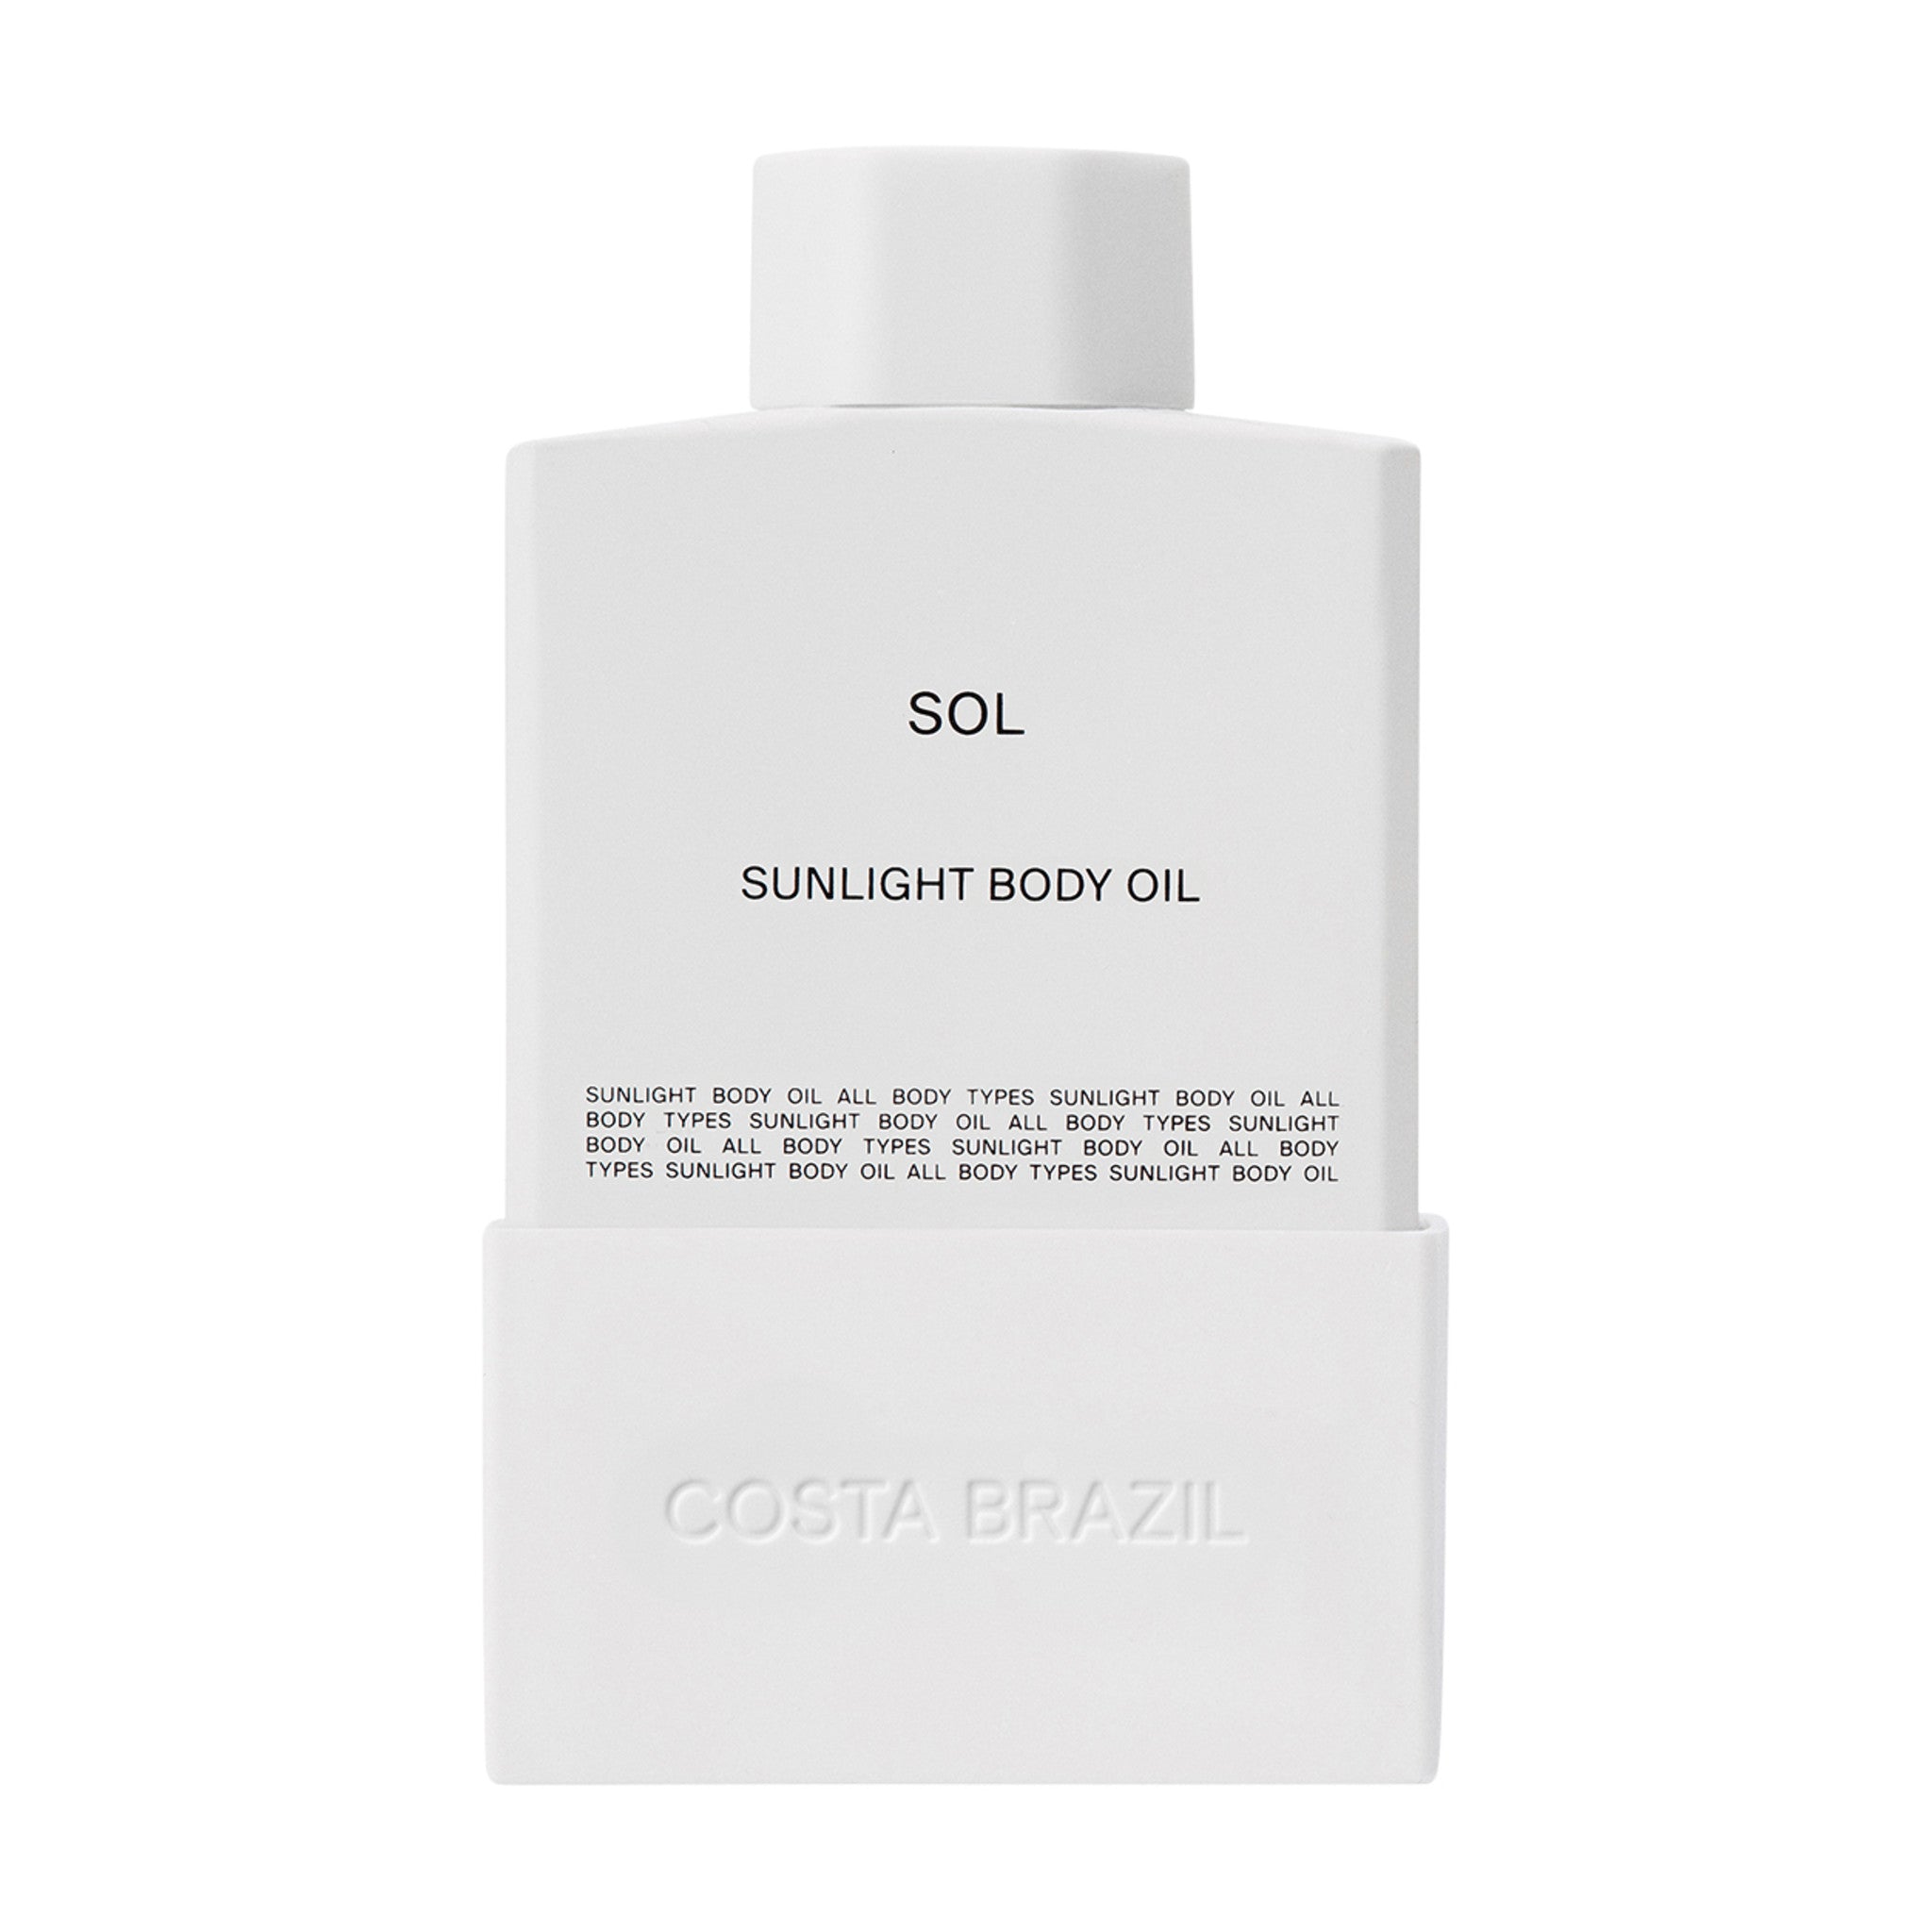 Costa Brazil Sol Sunlight Body Oil Size variant: 100 ml main image.